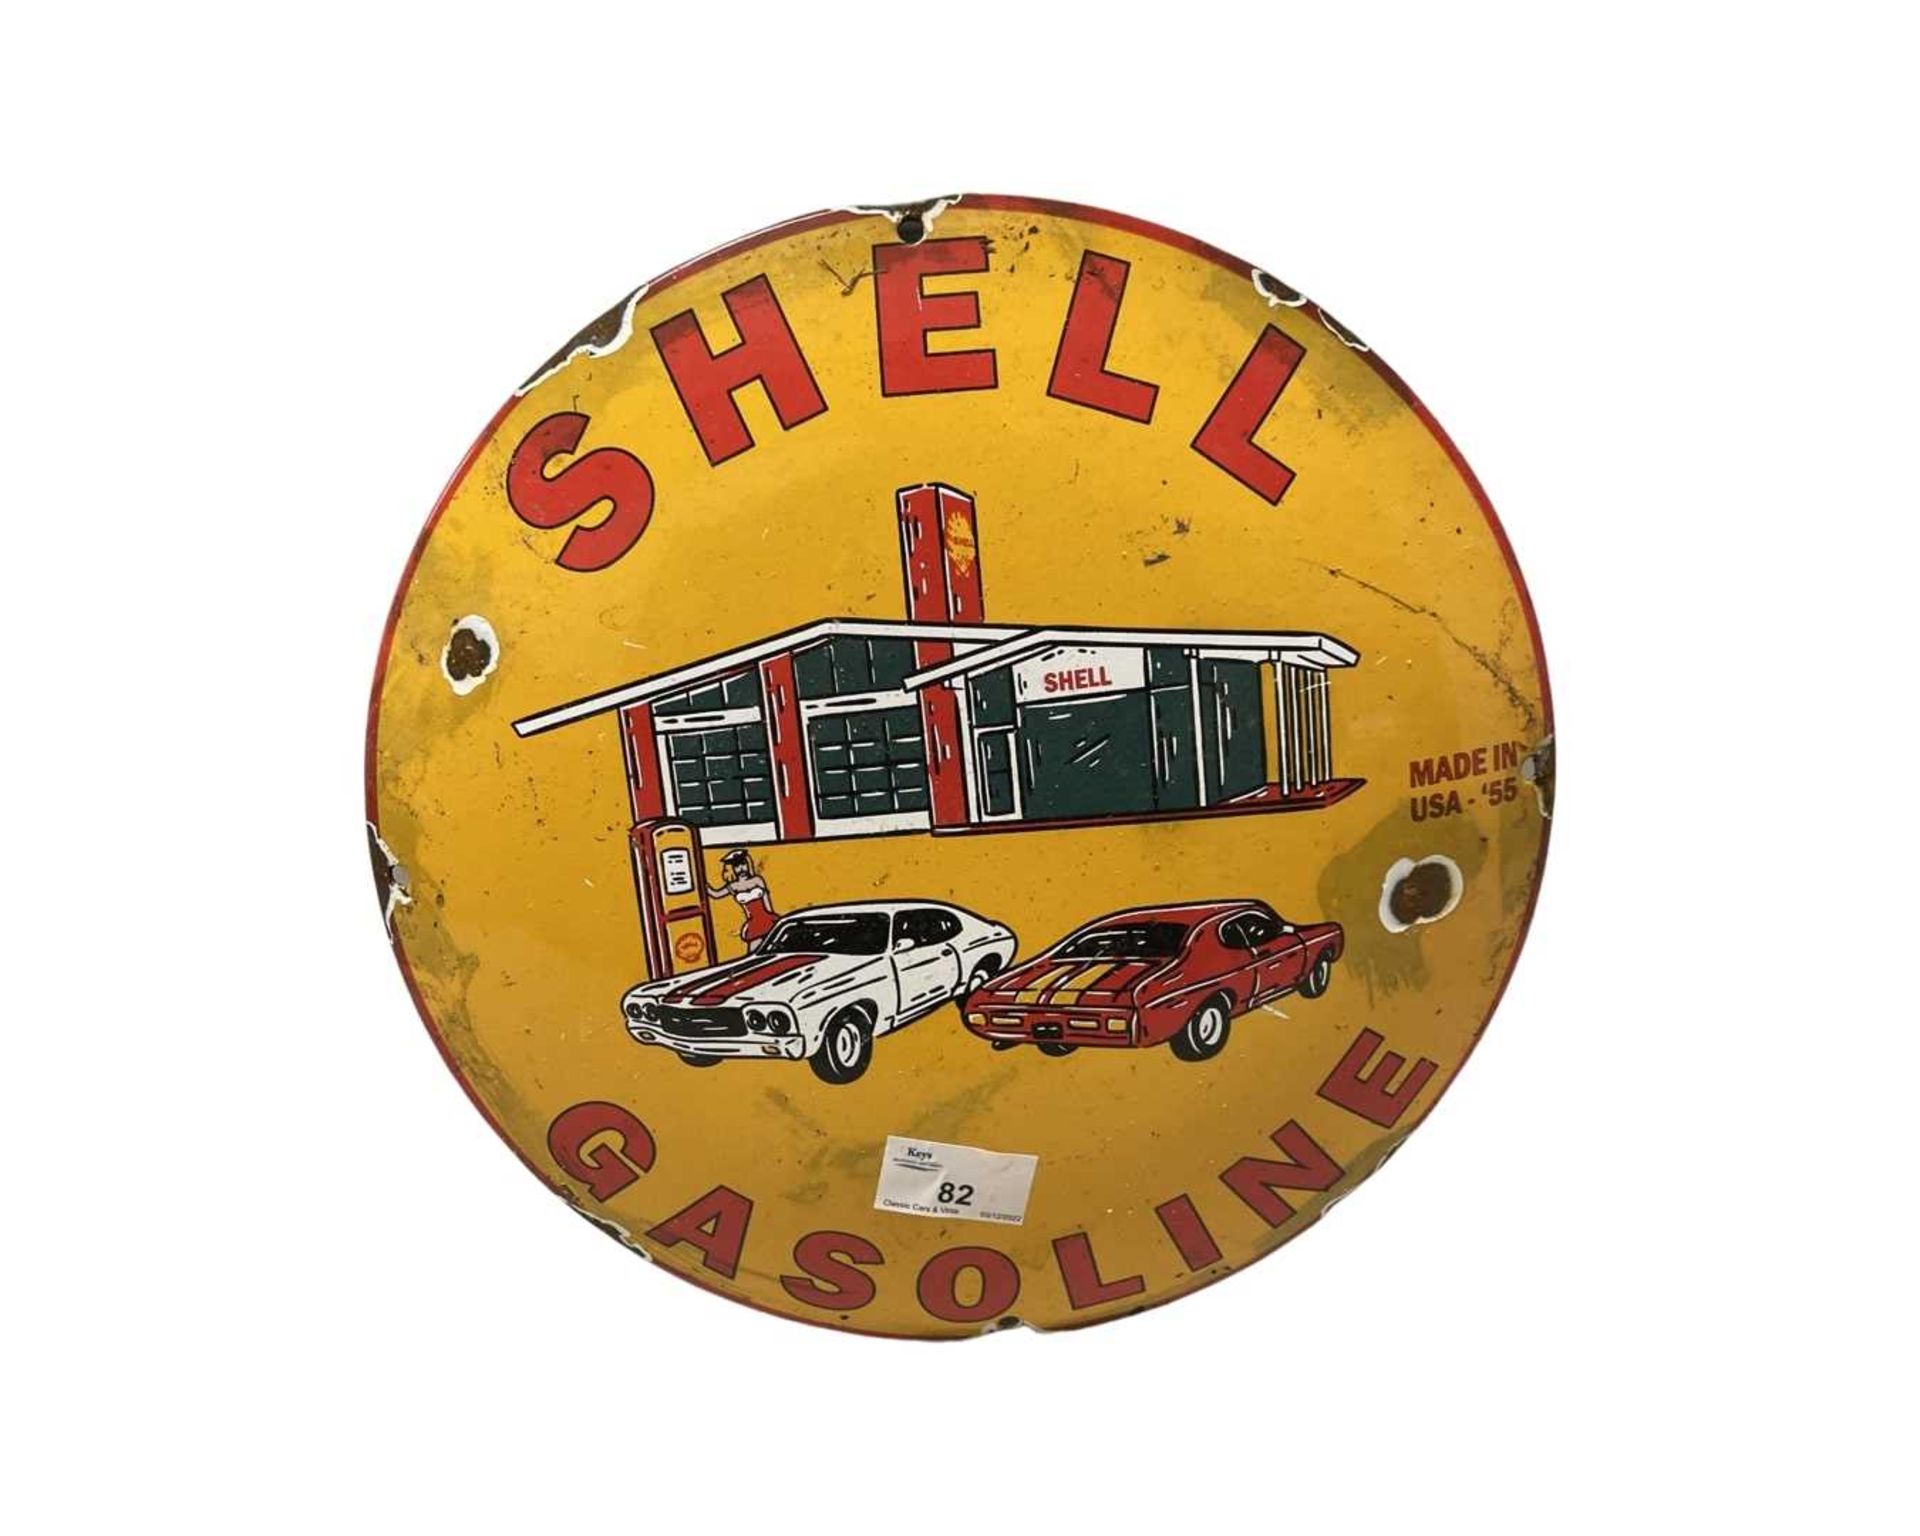 Shell Gasoline enamel sign